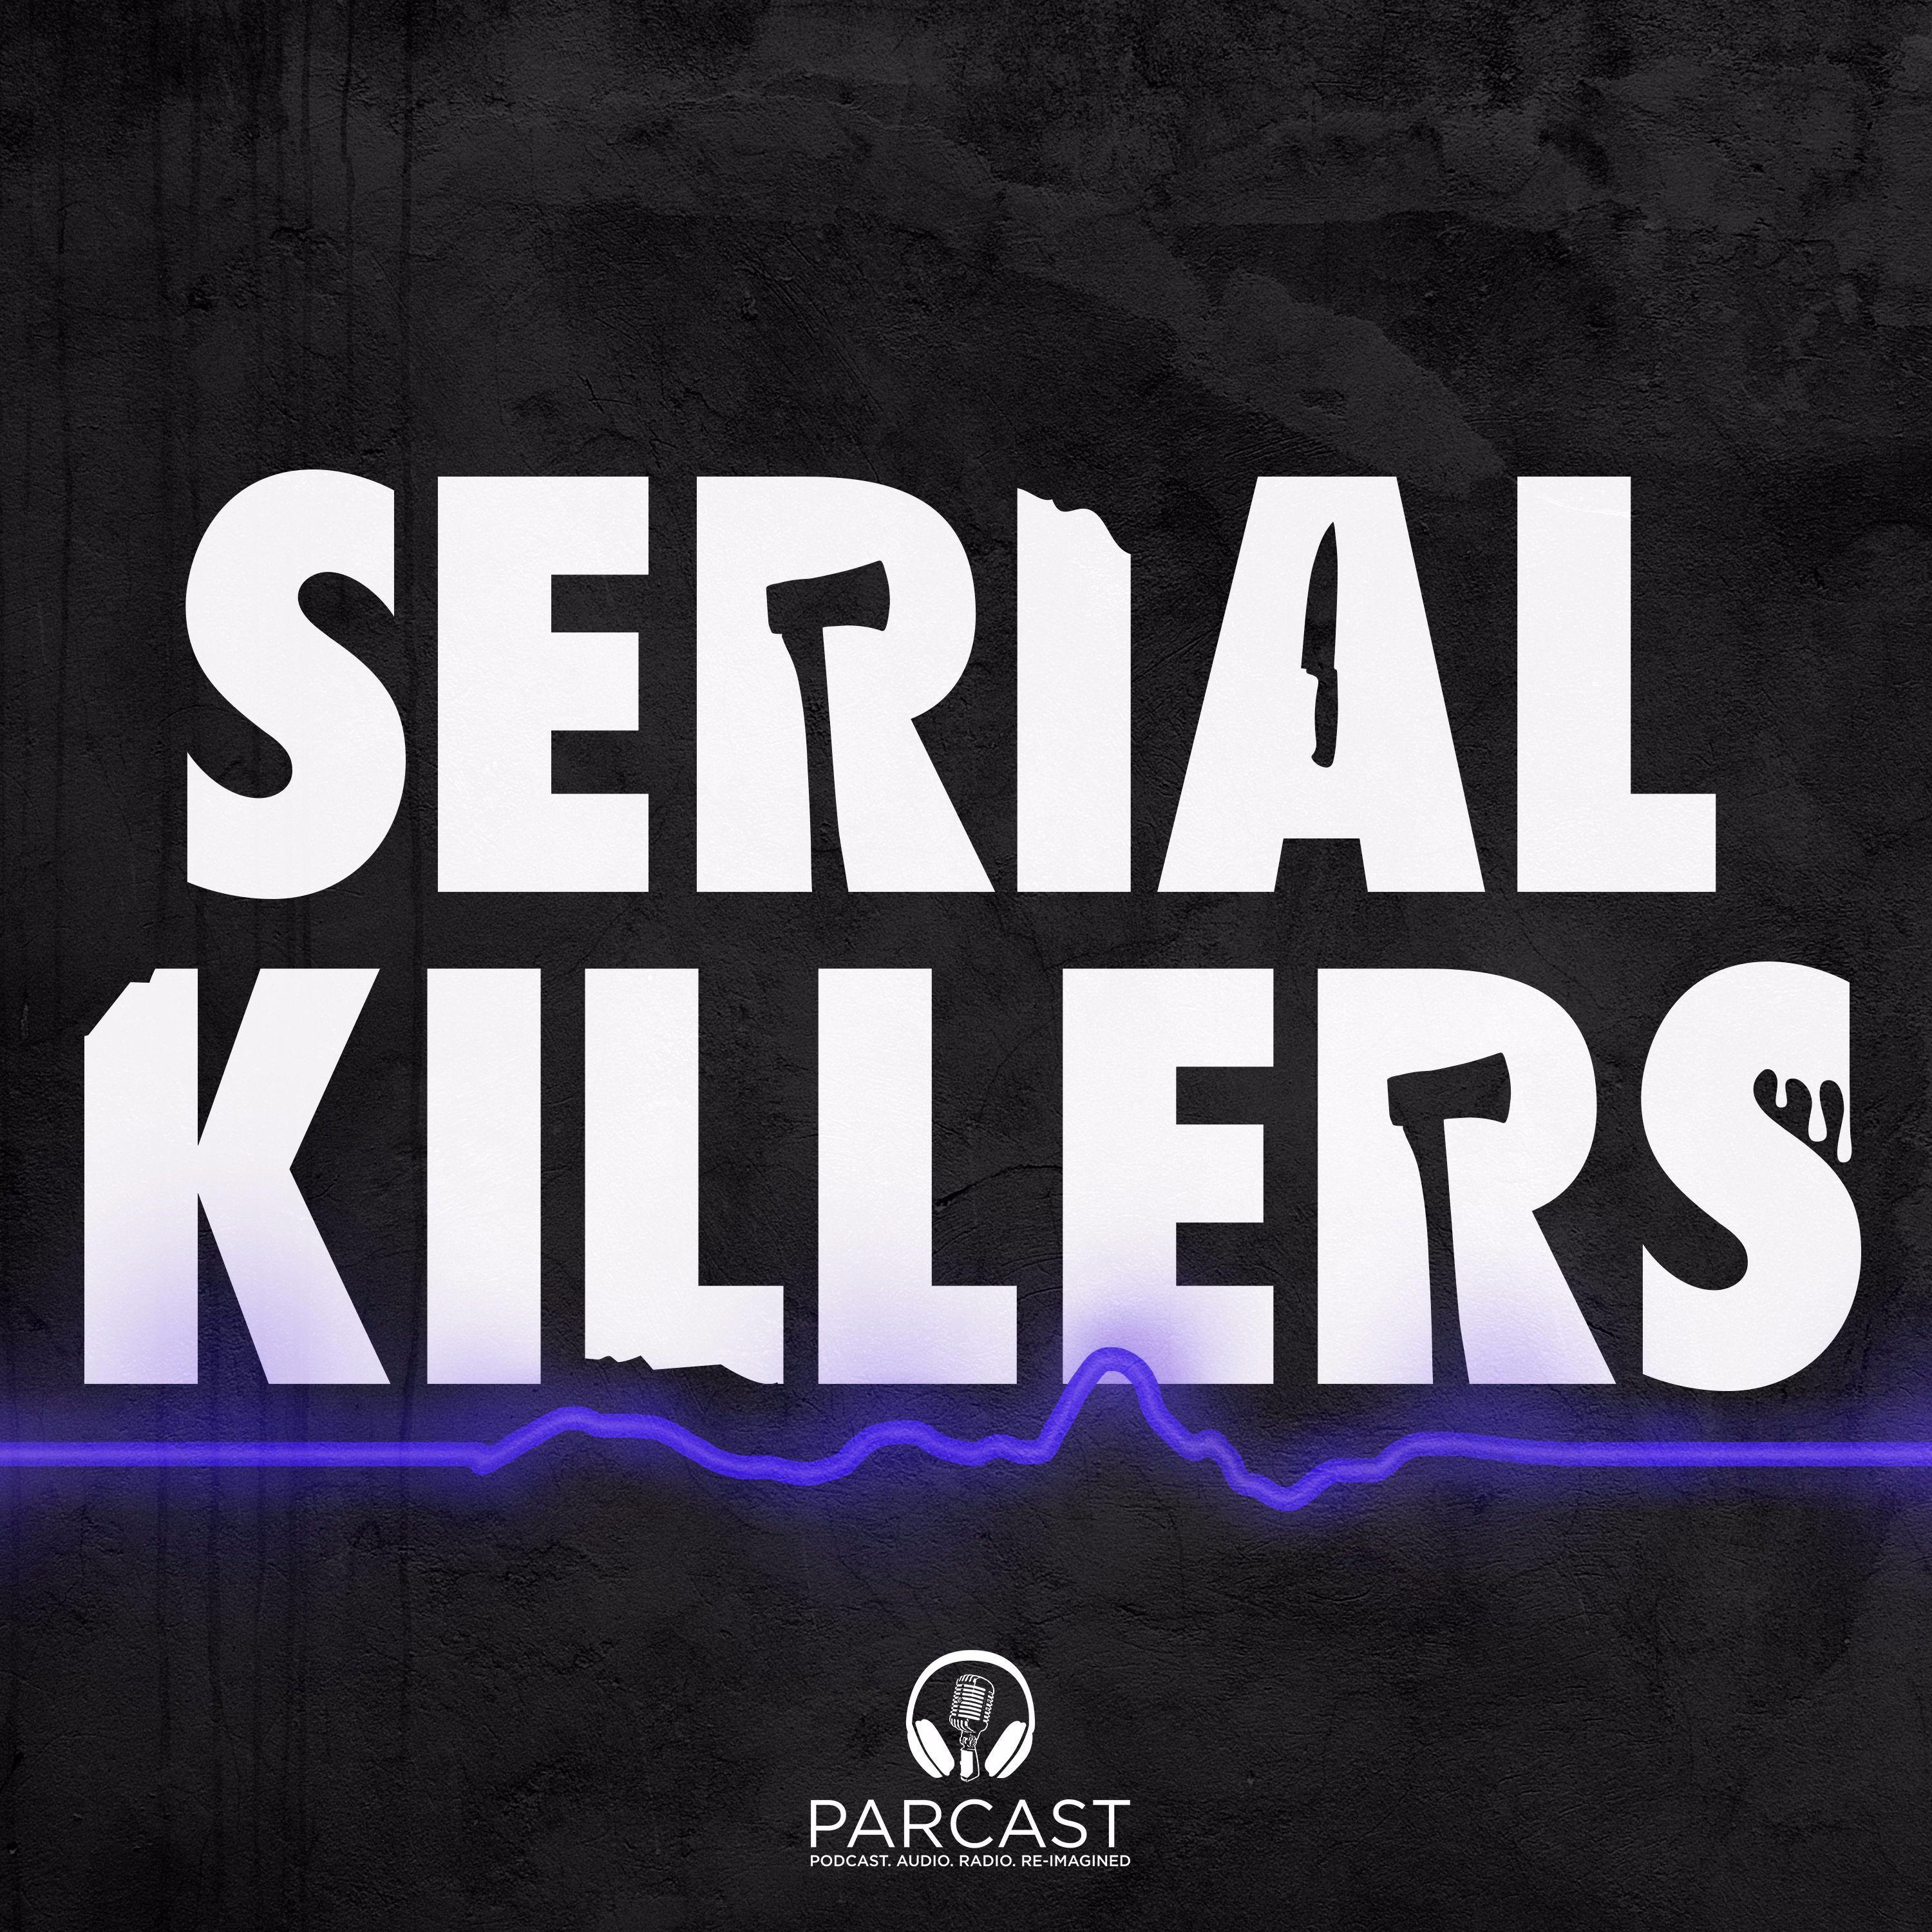 Killers Logo - pod|fanatic | Podcast: Serial Killers